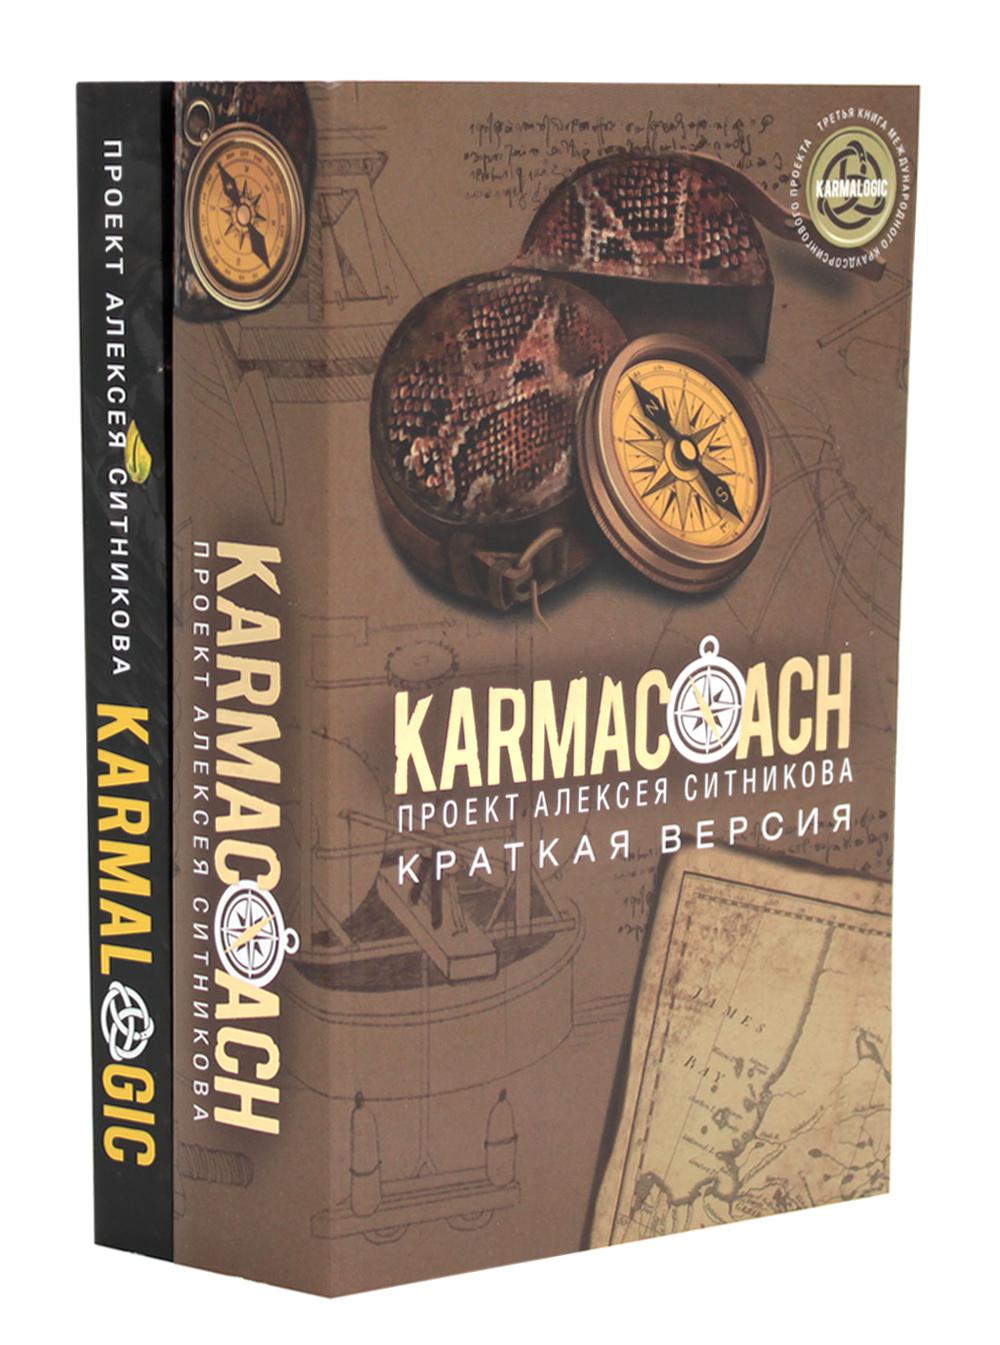 KARMACOACH+KARMALOGIC    2  